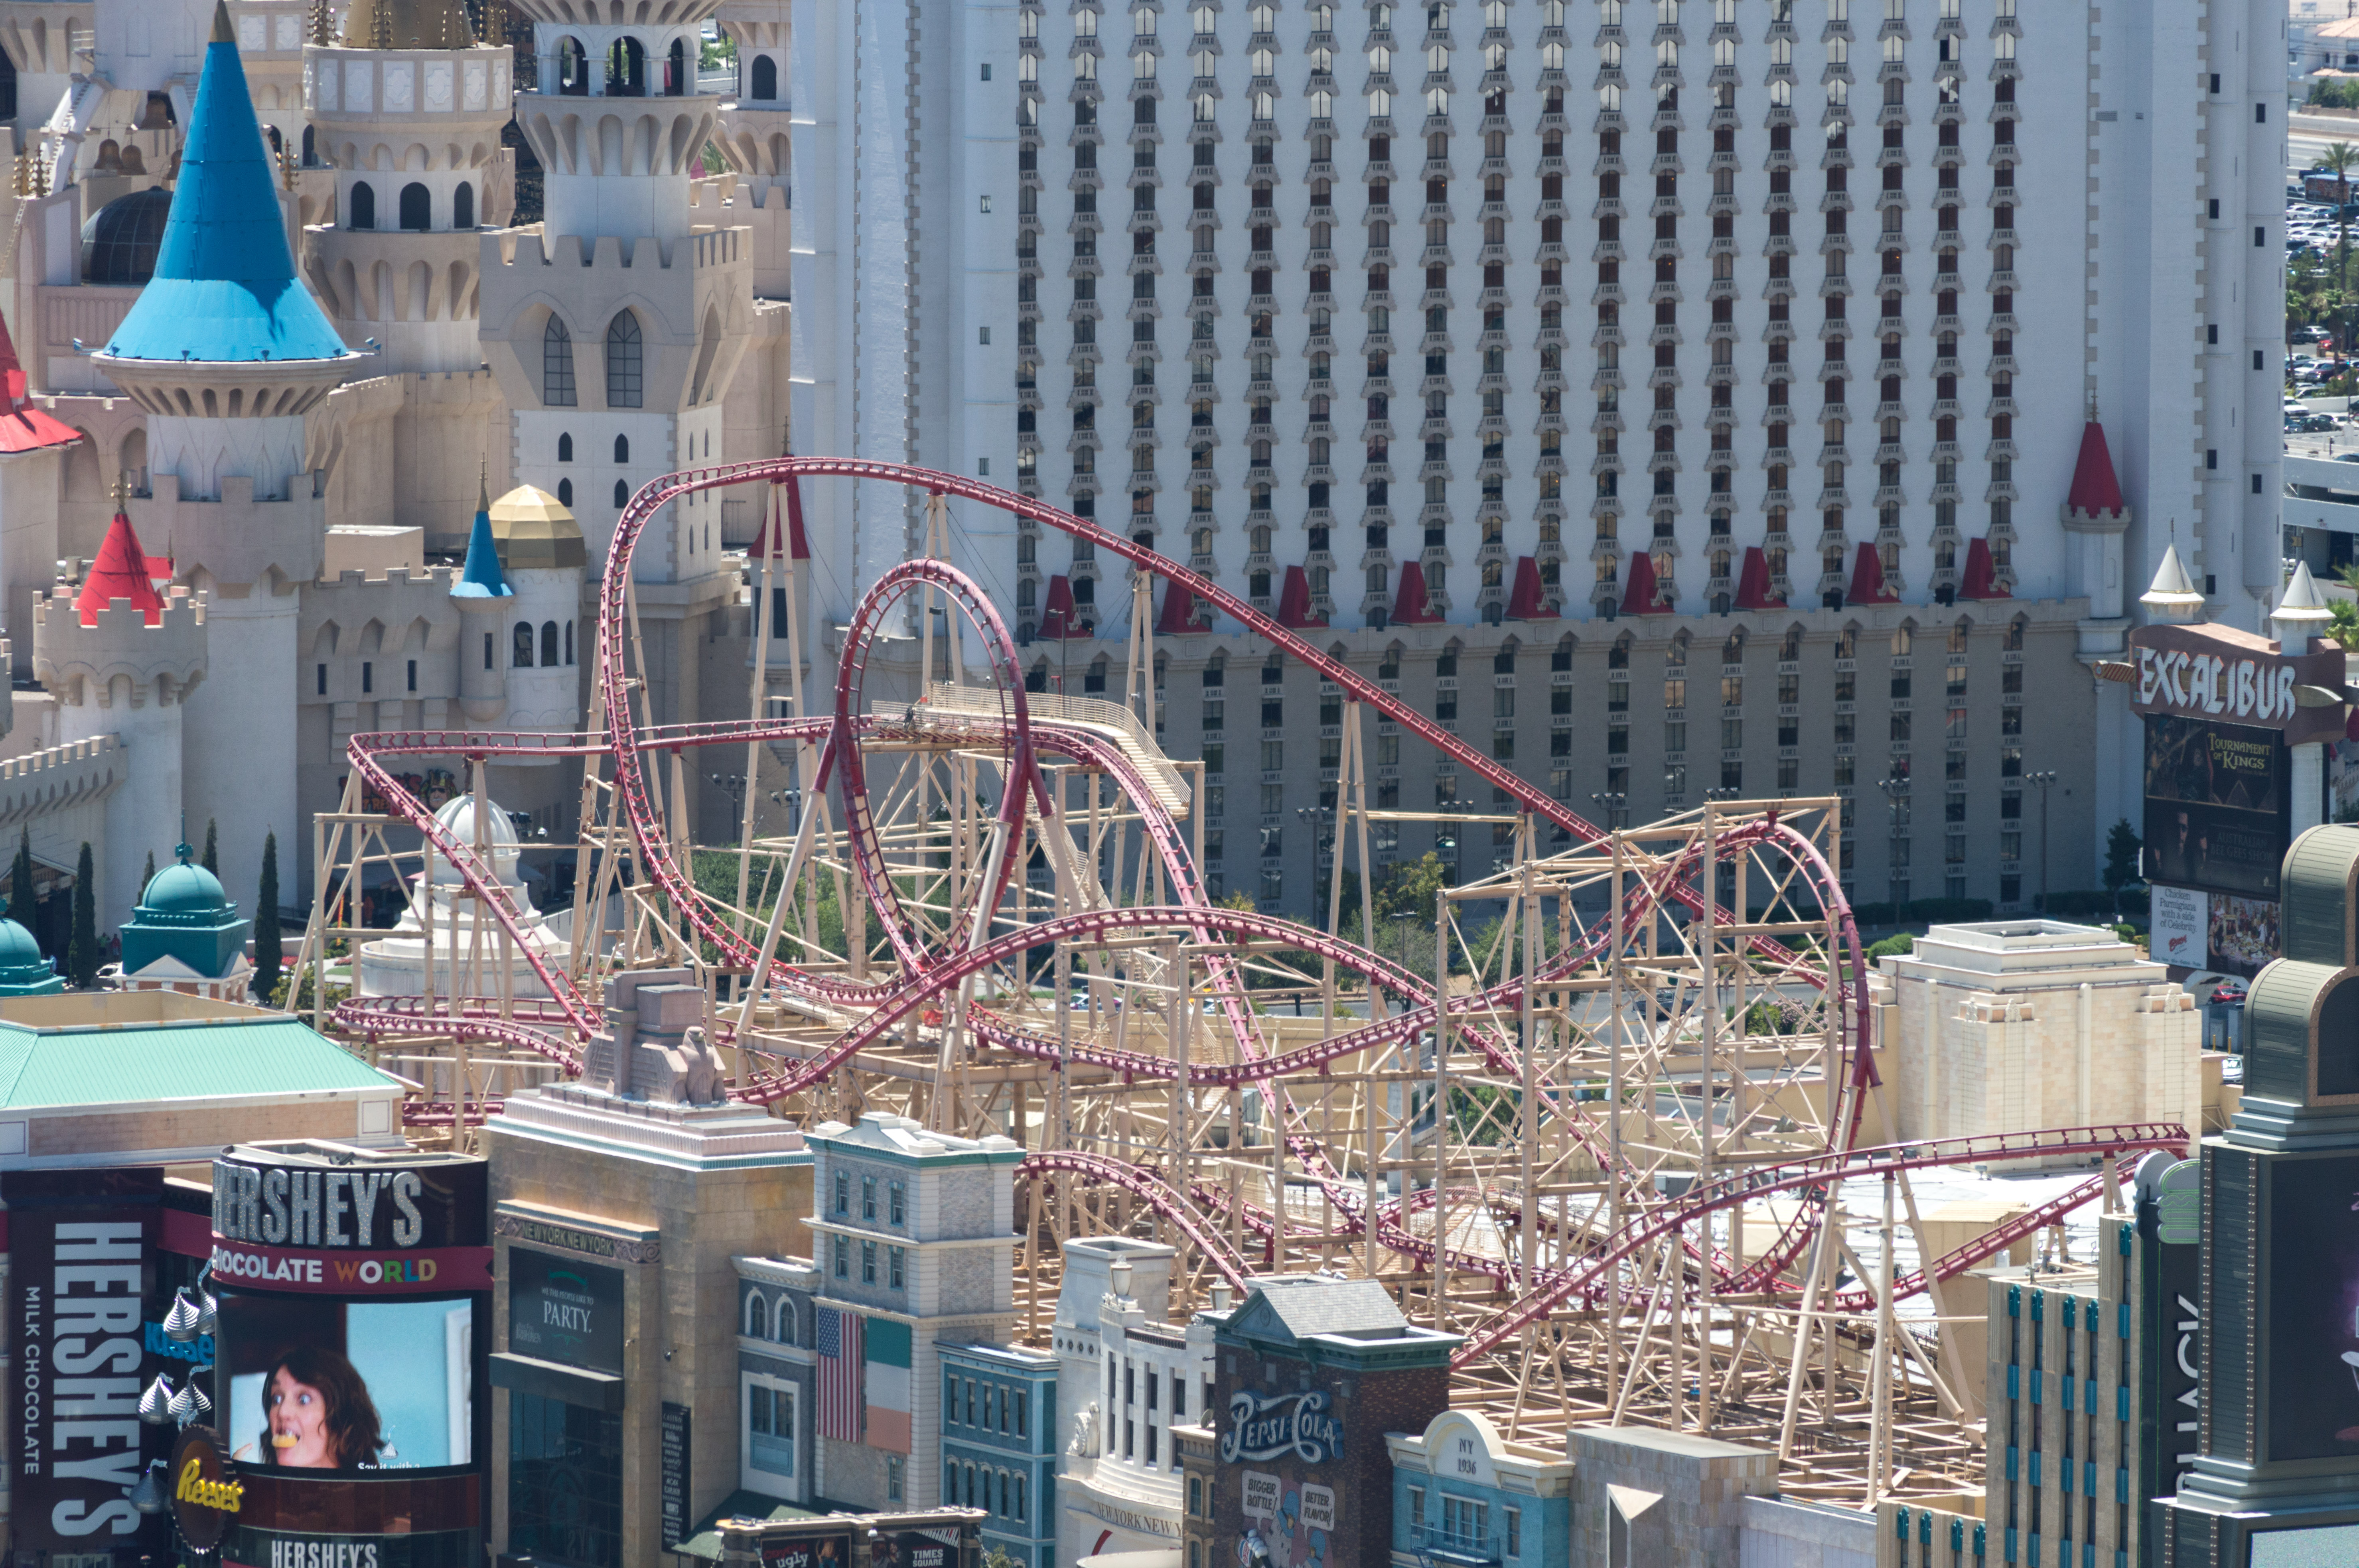 The Roller Coaster . New York New York Las Vegas Hotel & C…